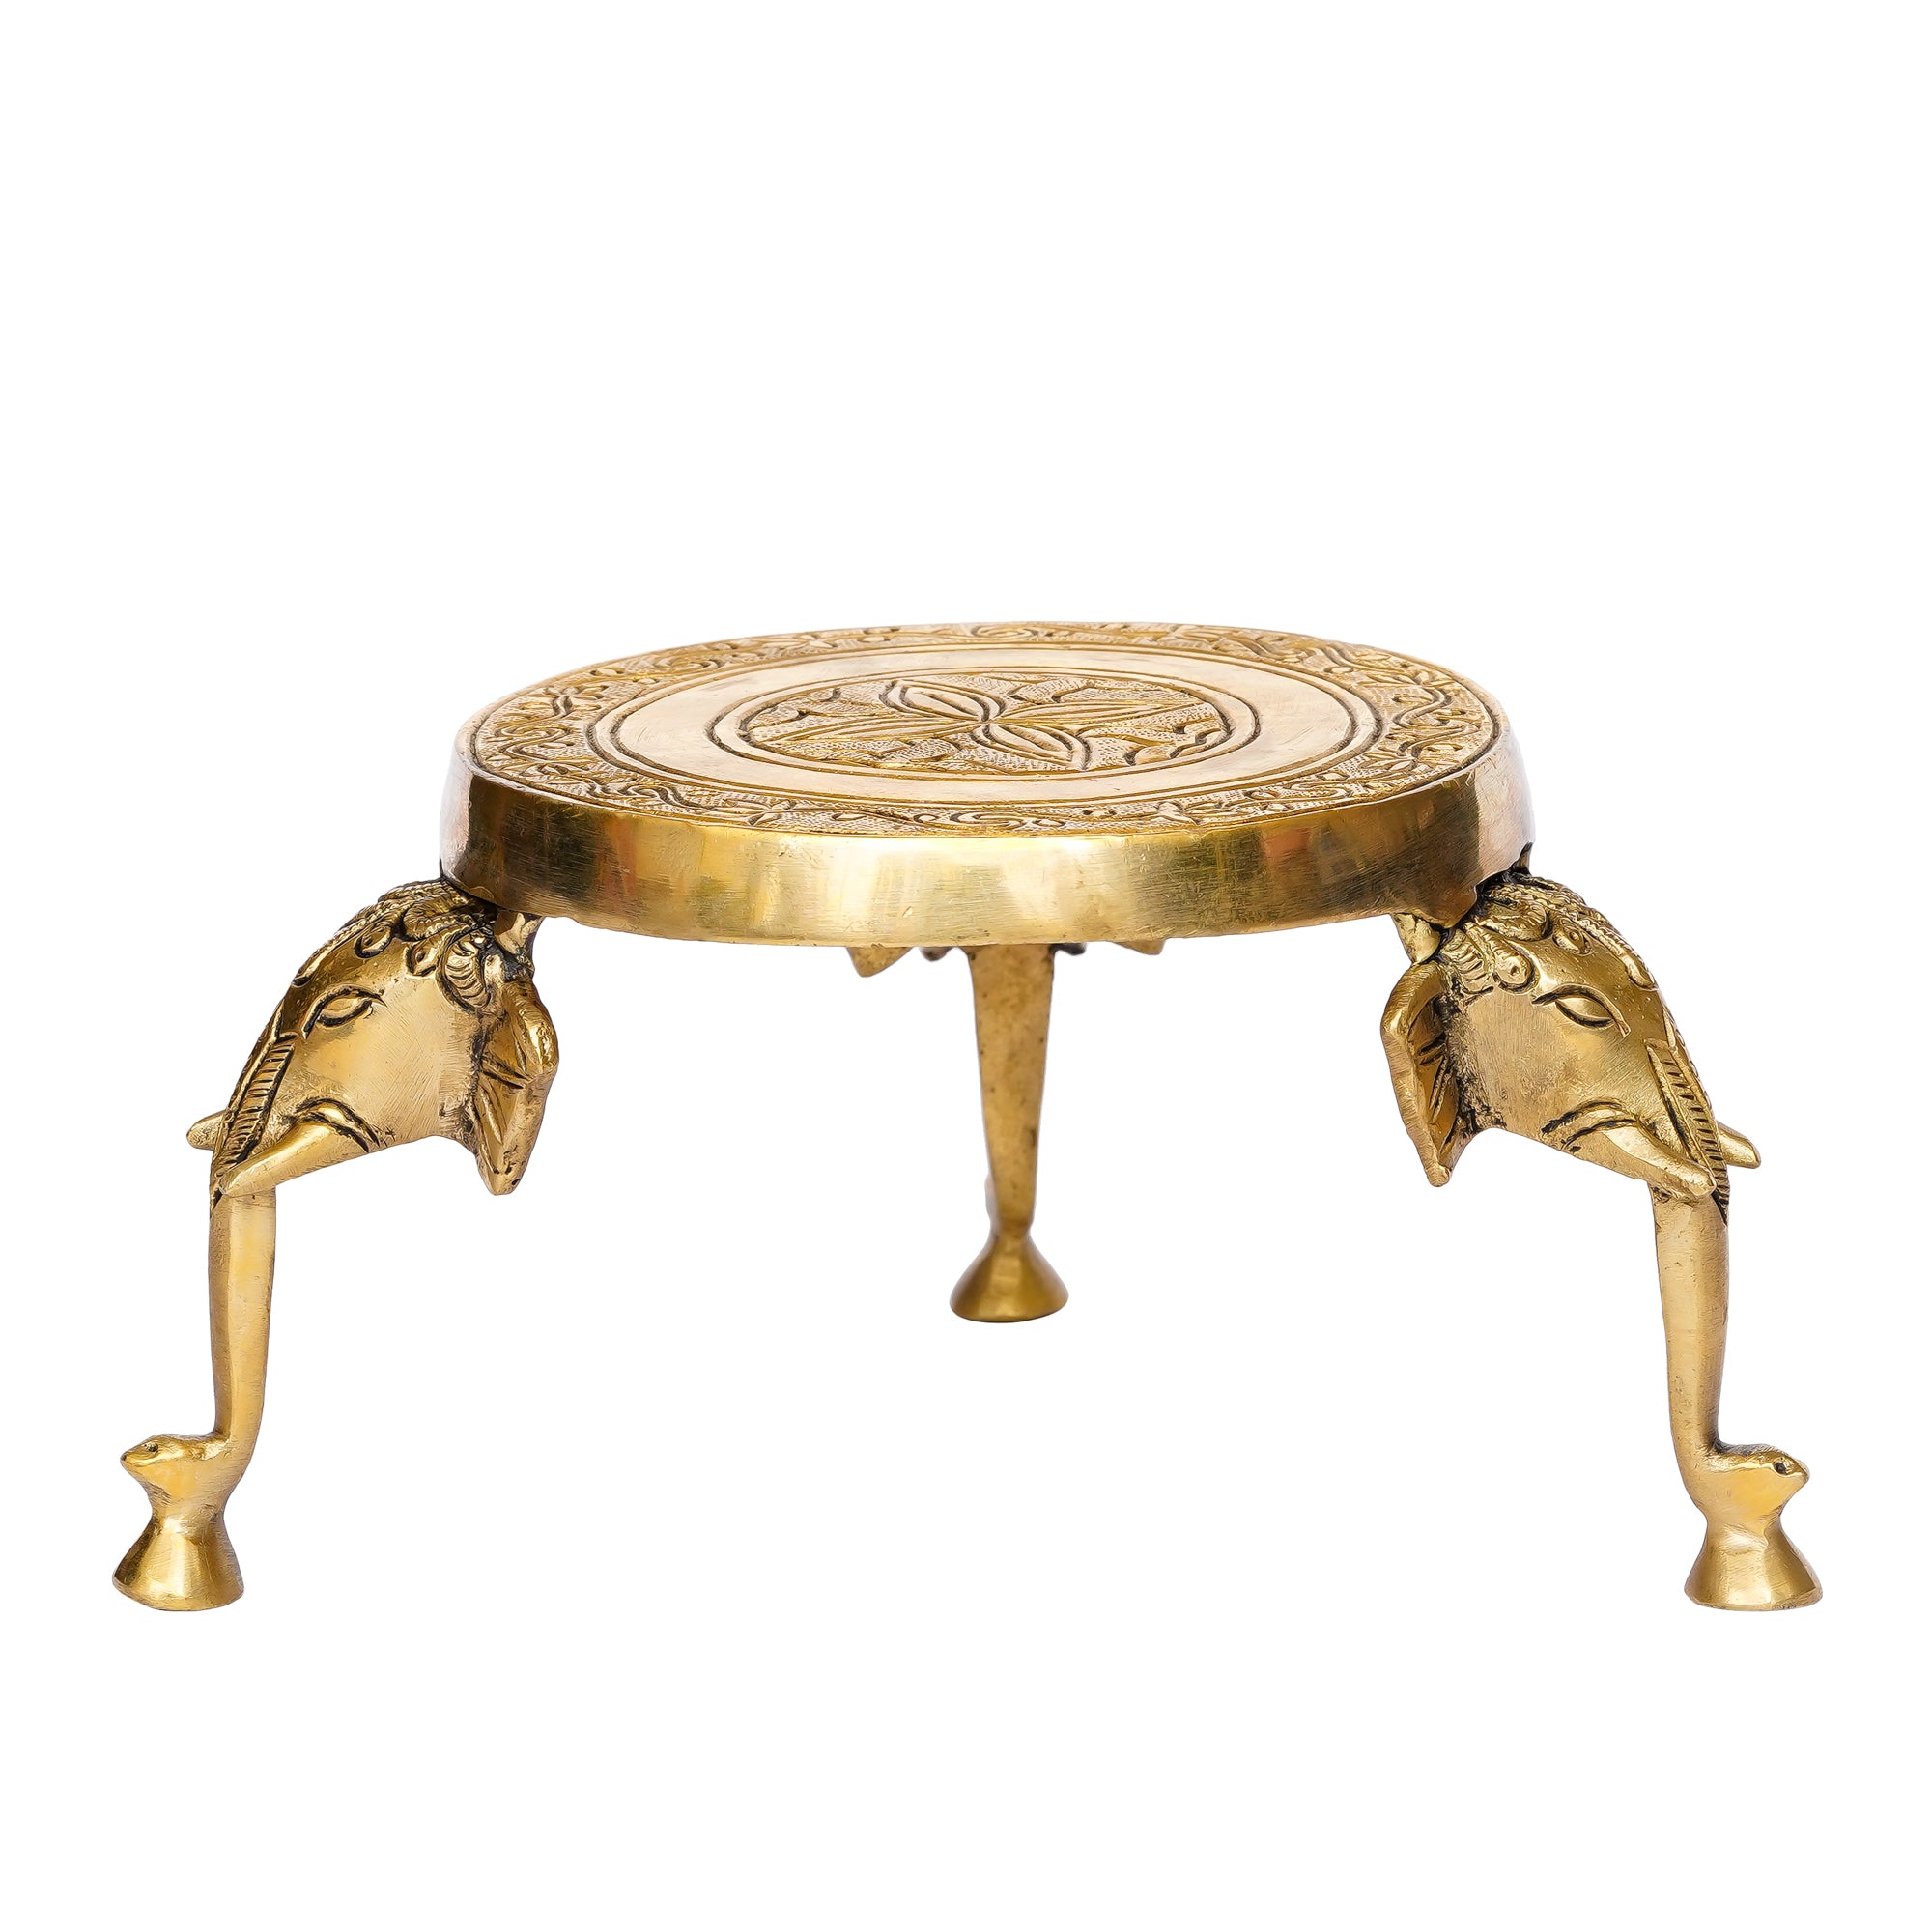 Decorative Brass Stool With Elephant Design Legs 5